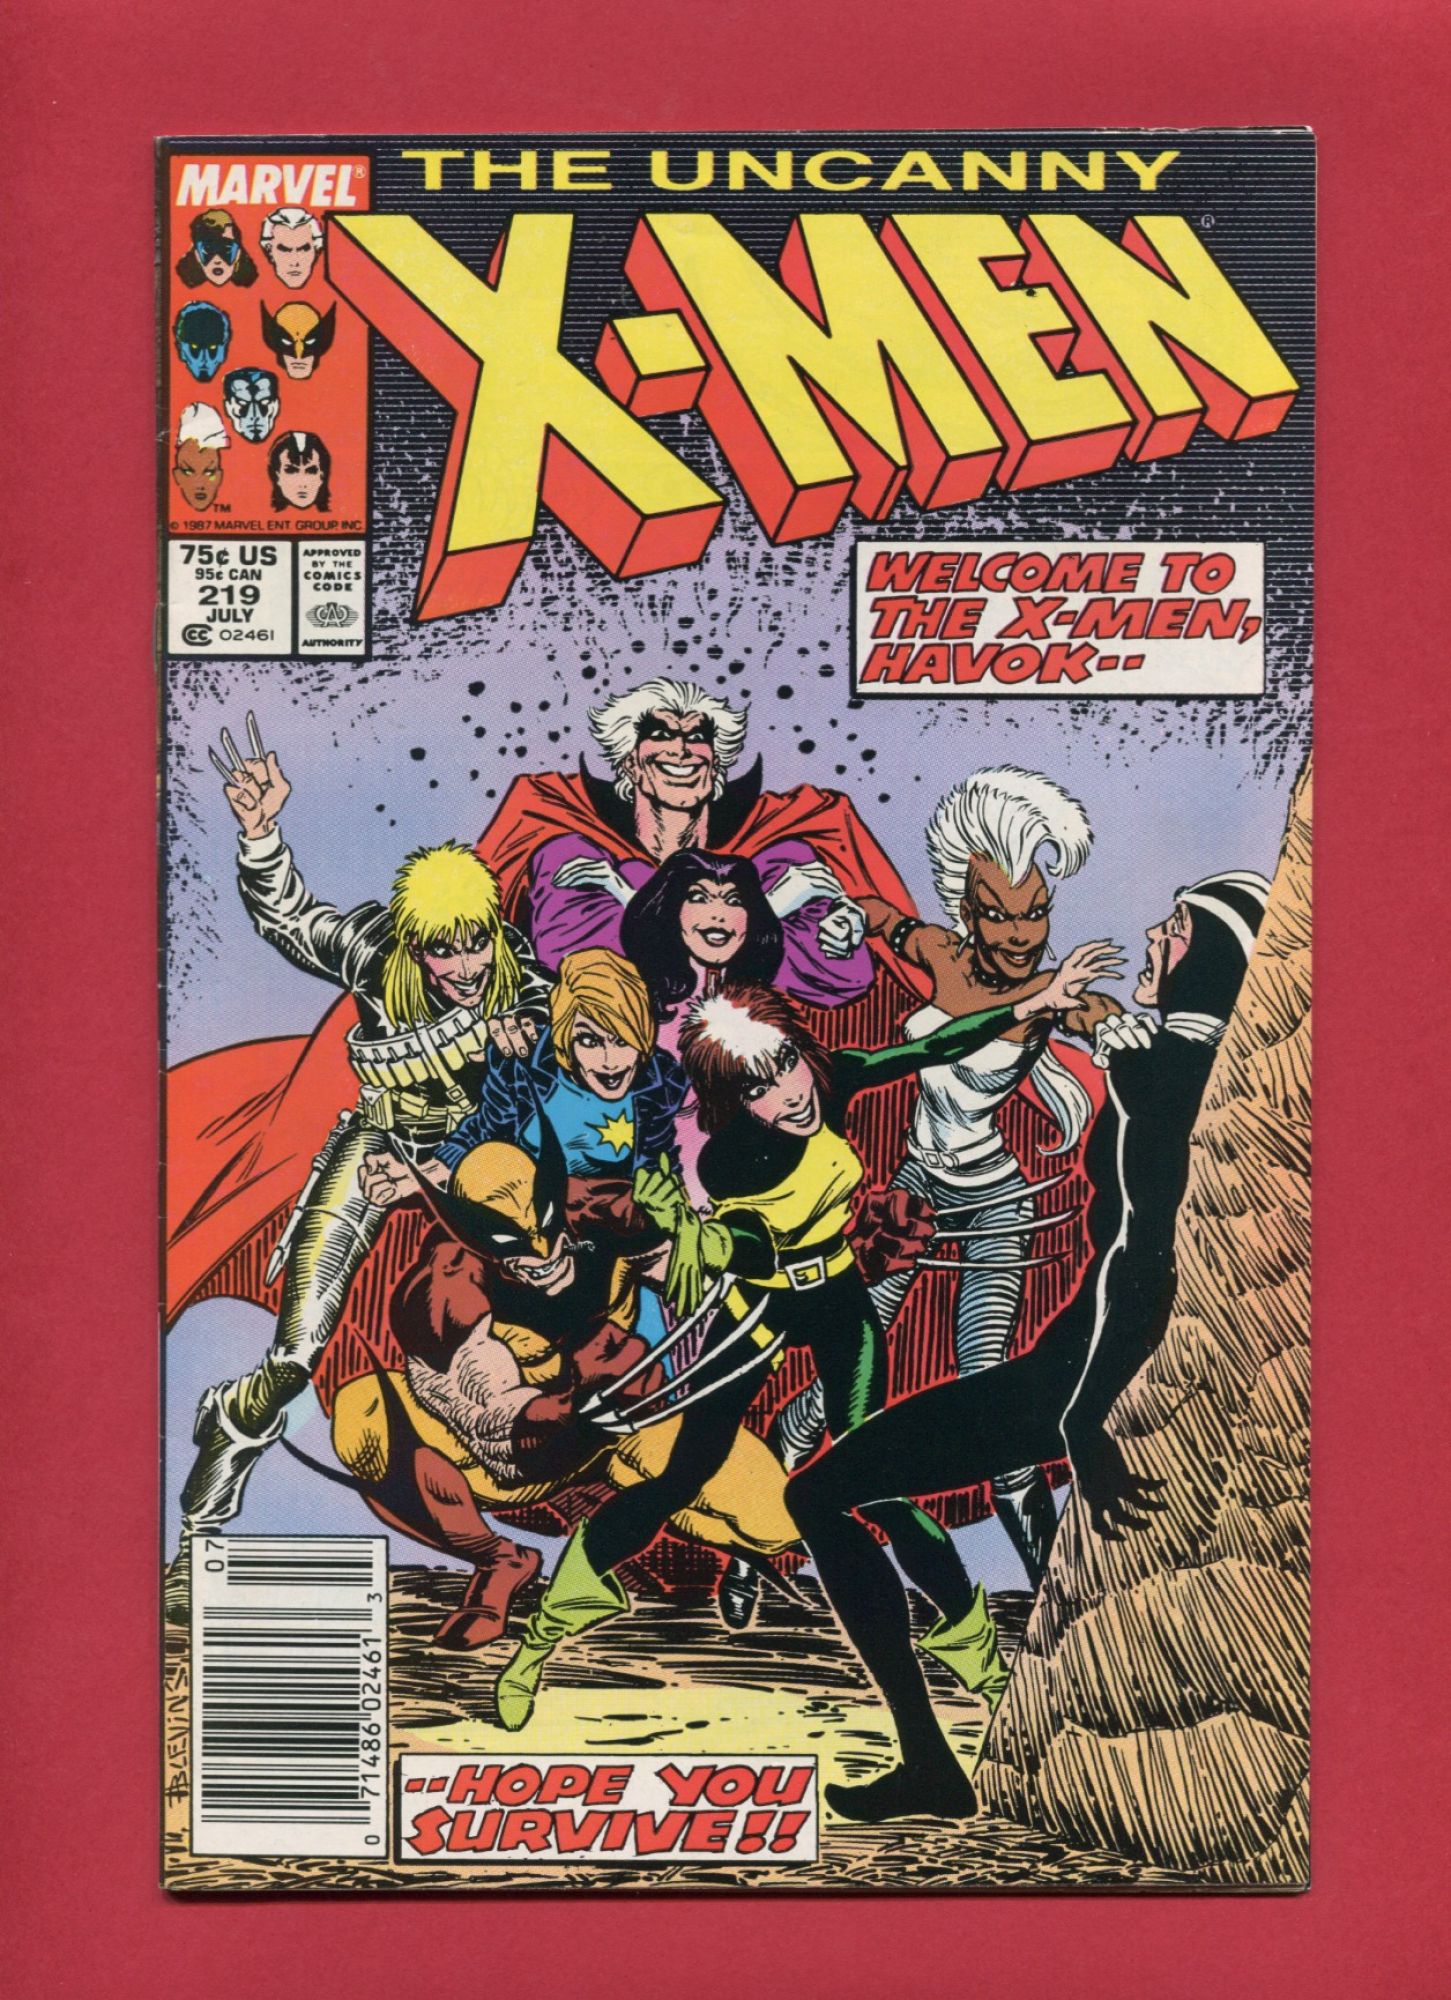 Uncanny X-Men #219, Jul 1987, 7.0 FN/VF